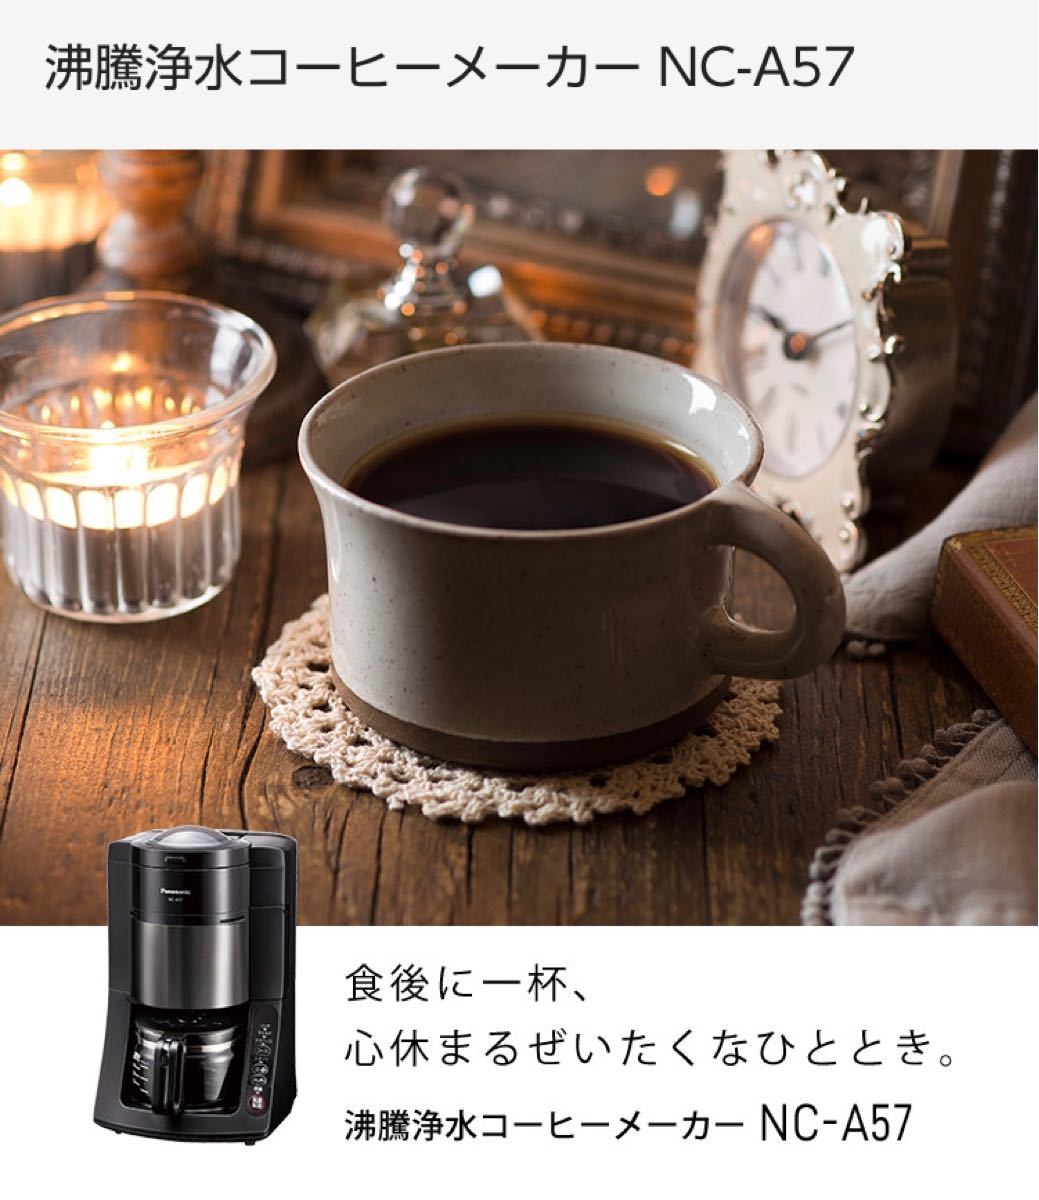 Panasonic 沸騰浄水コーヒーメーカー NC-A57-K